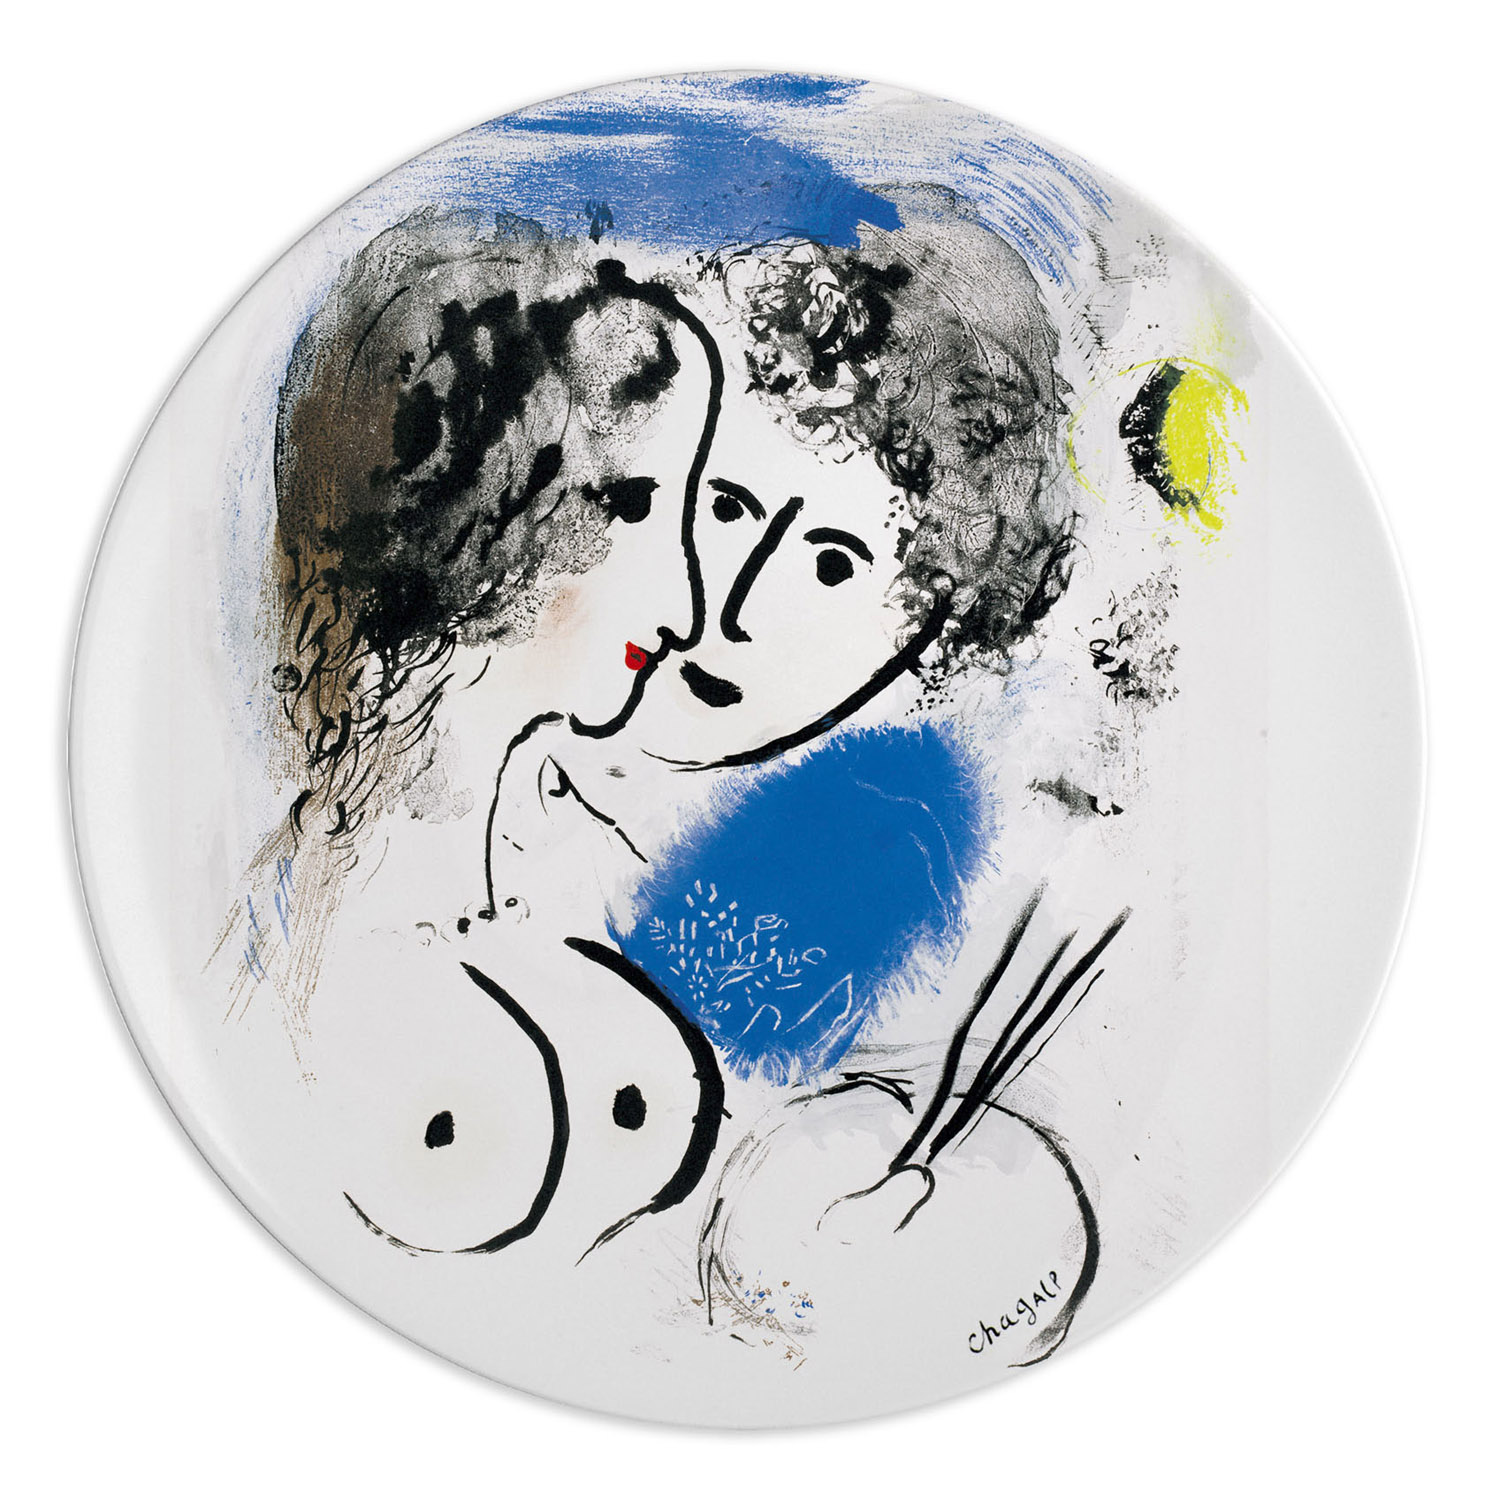 chagall-ass26palette-adagp-paris-2011-chagall-collection.jpg